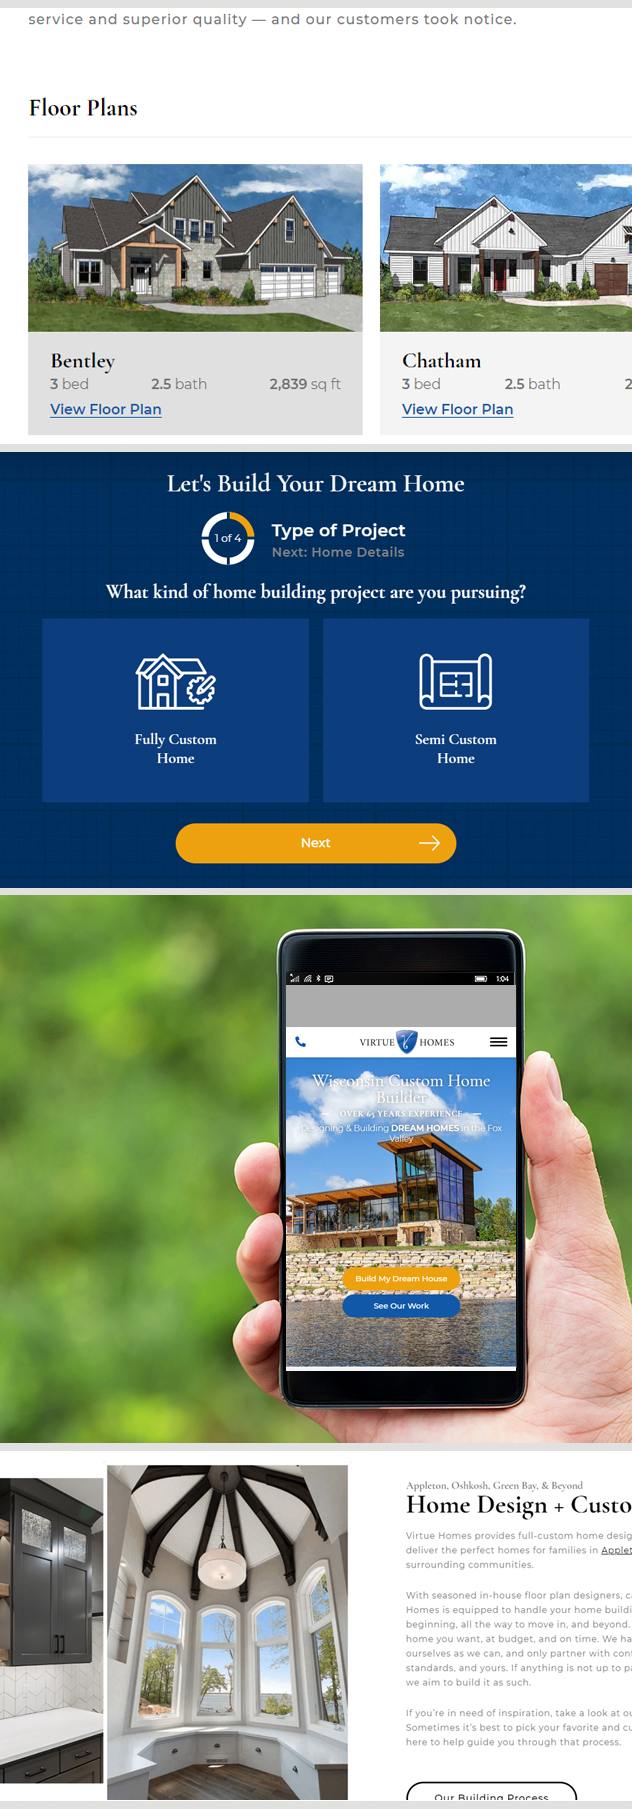 Milwaukee web marketing for Virtue Homes Custom Home Builder